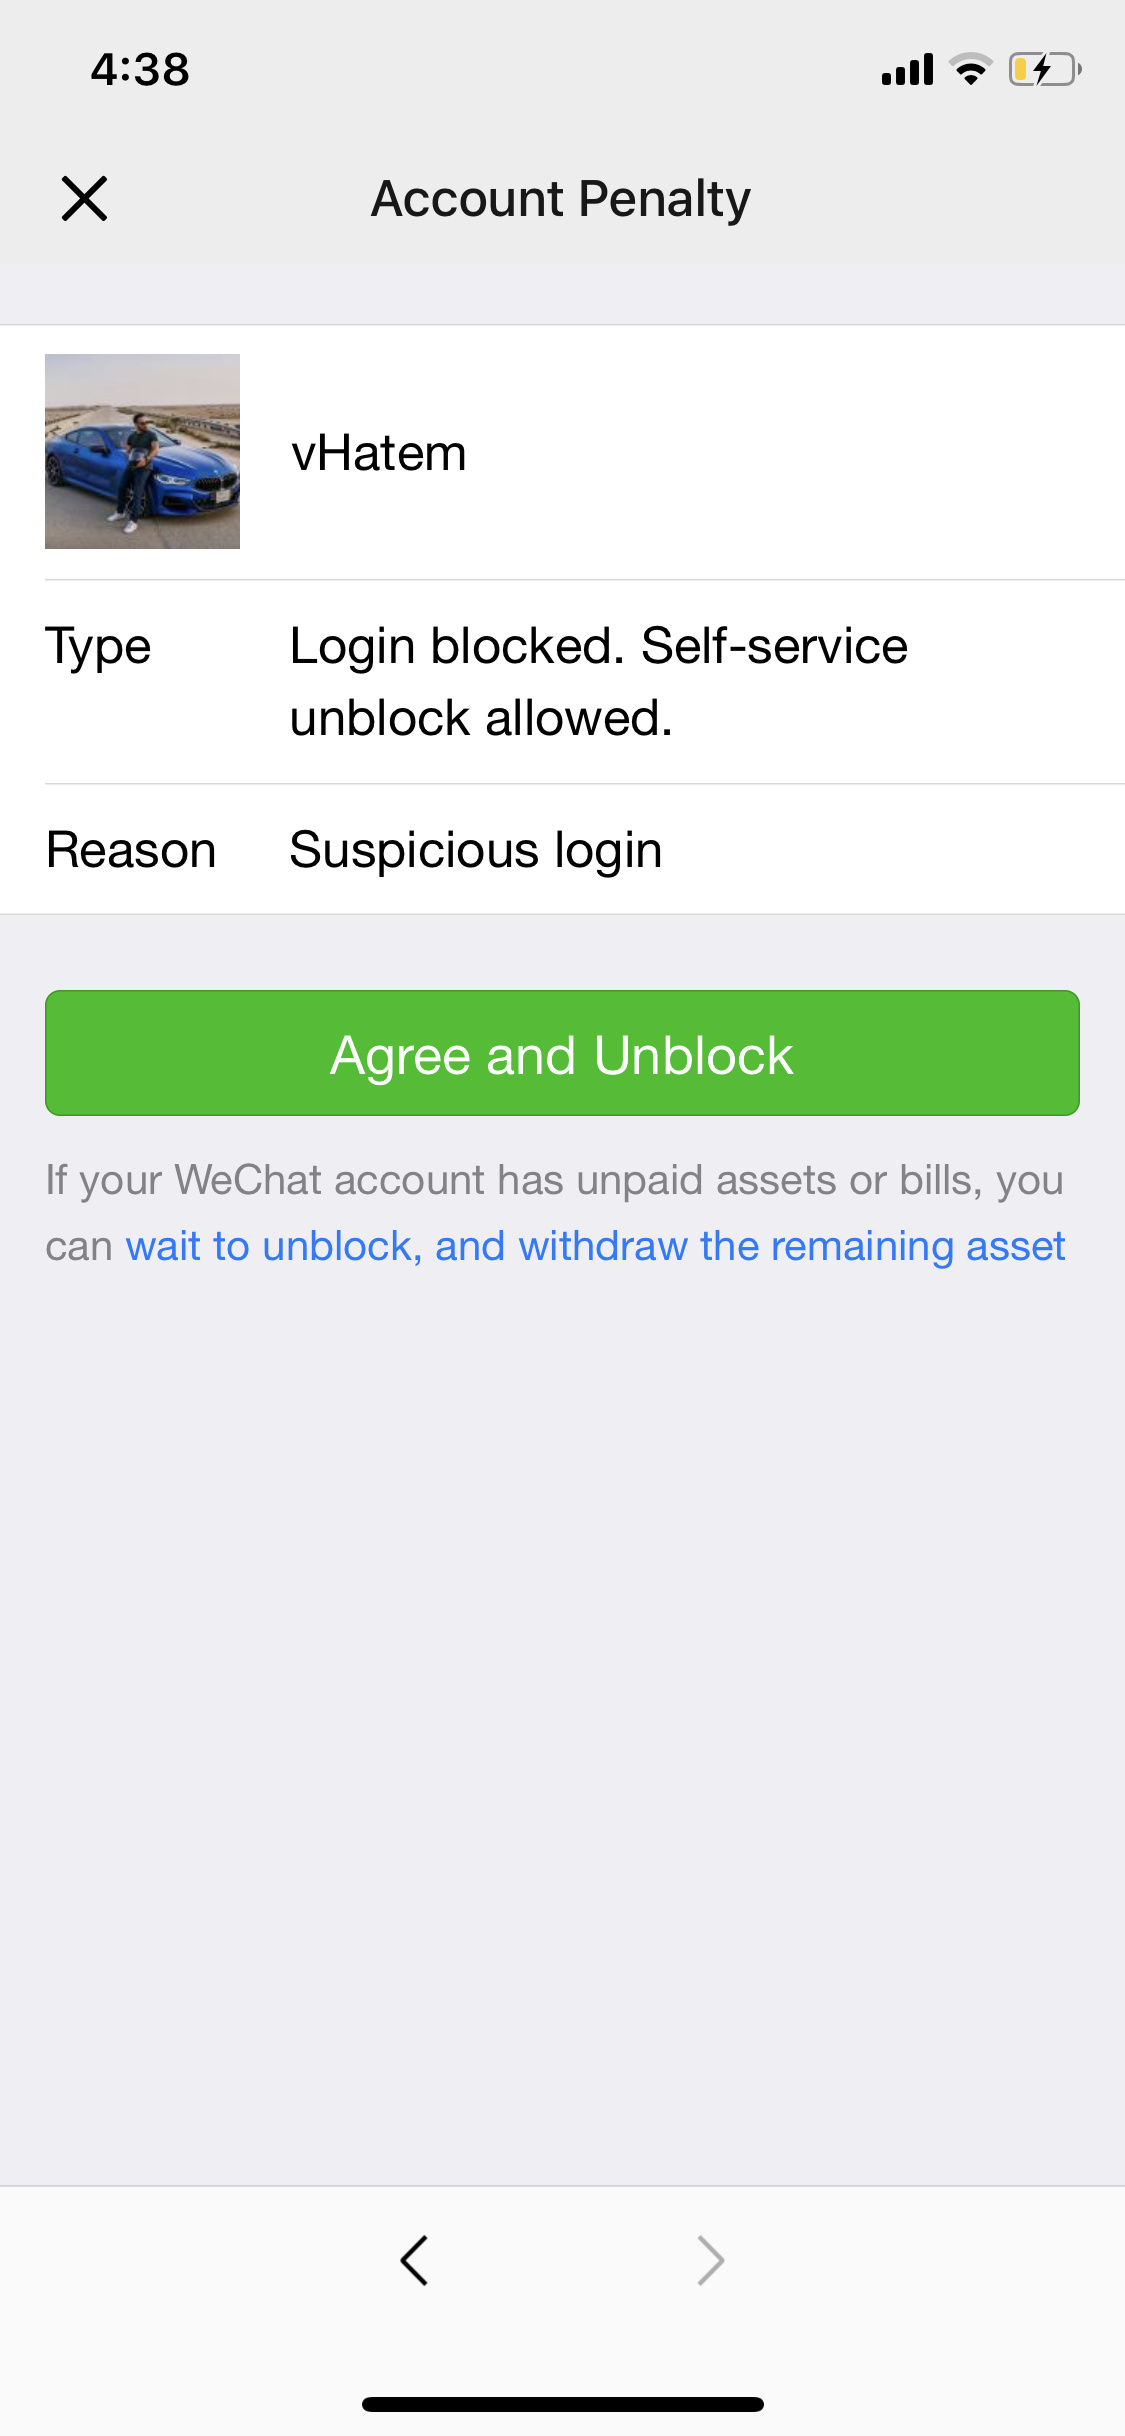 Allowed blocked unlock login wechat self-service Check Balance